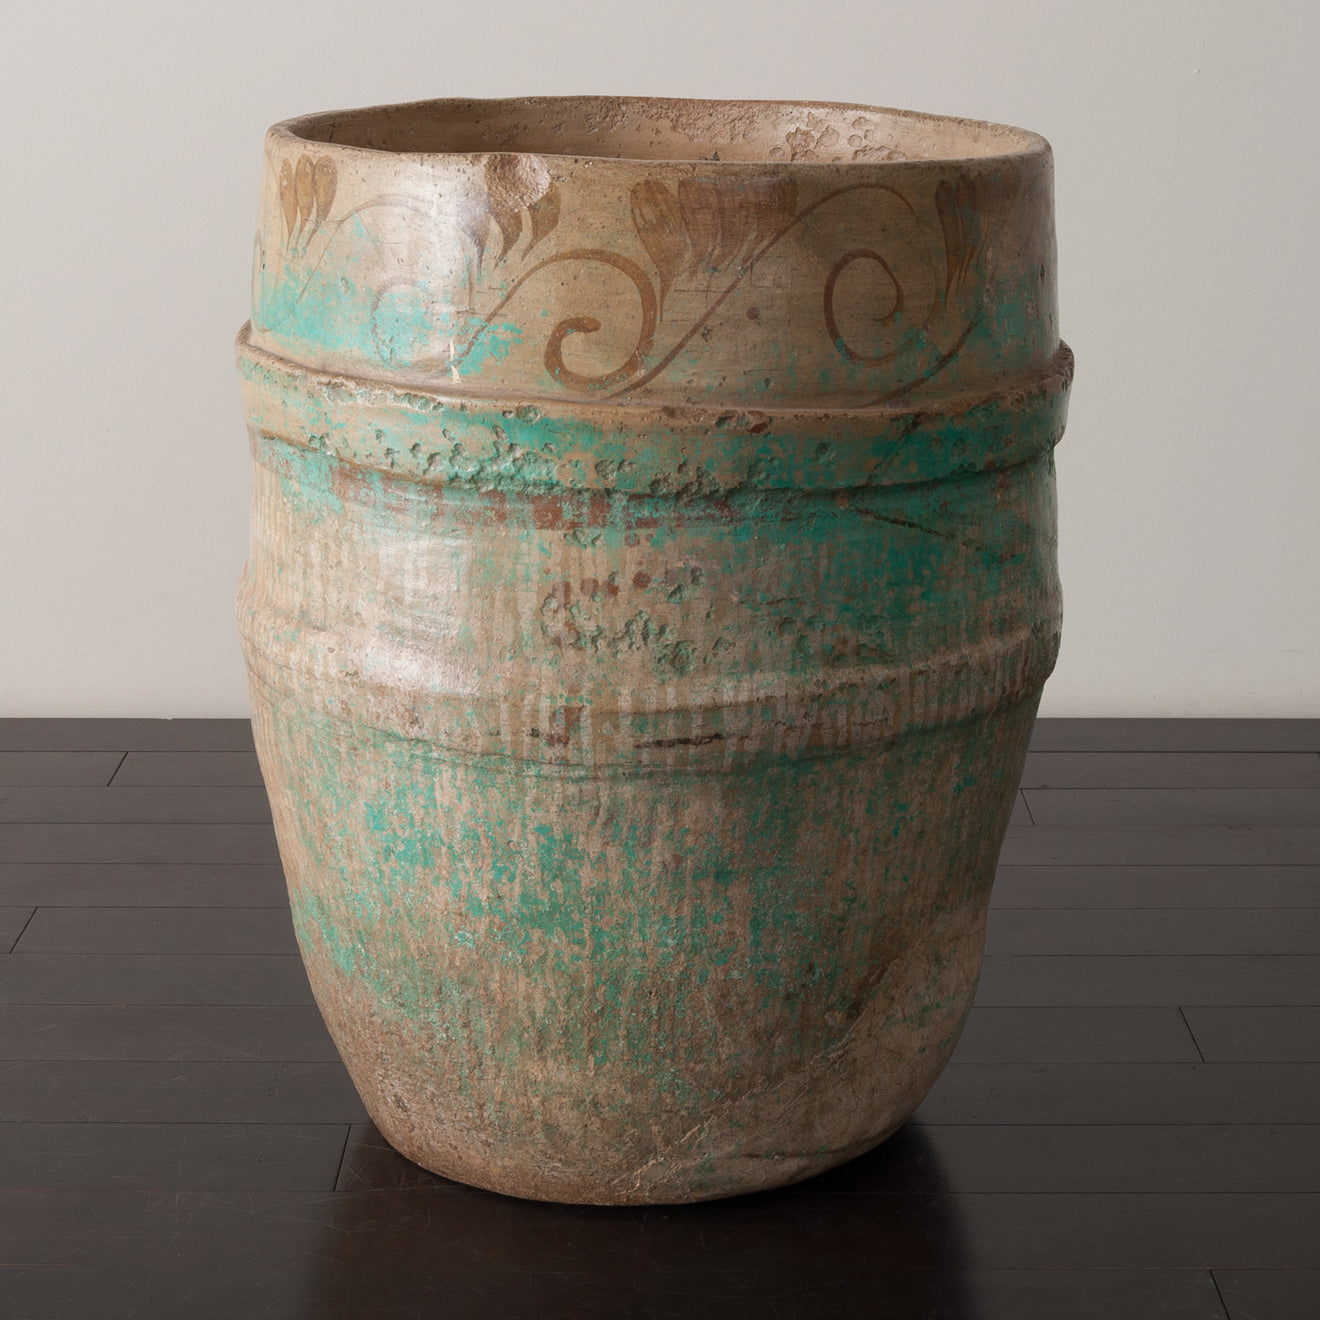 TONALA ceramic vessel